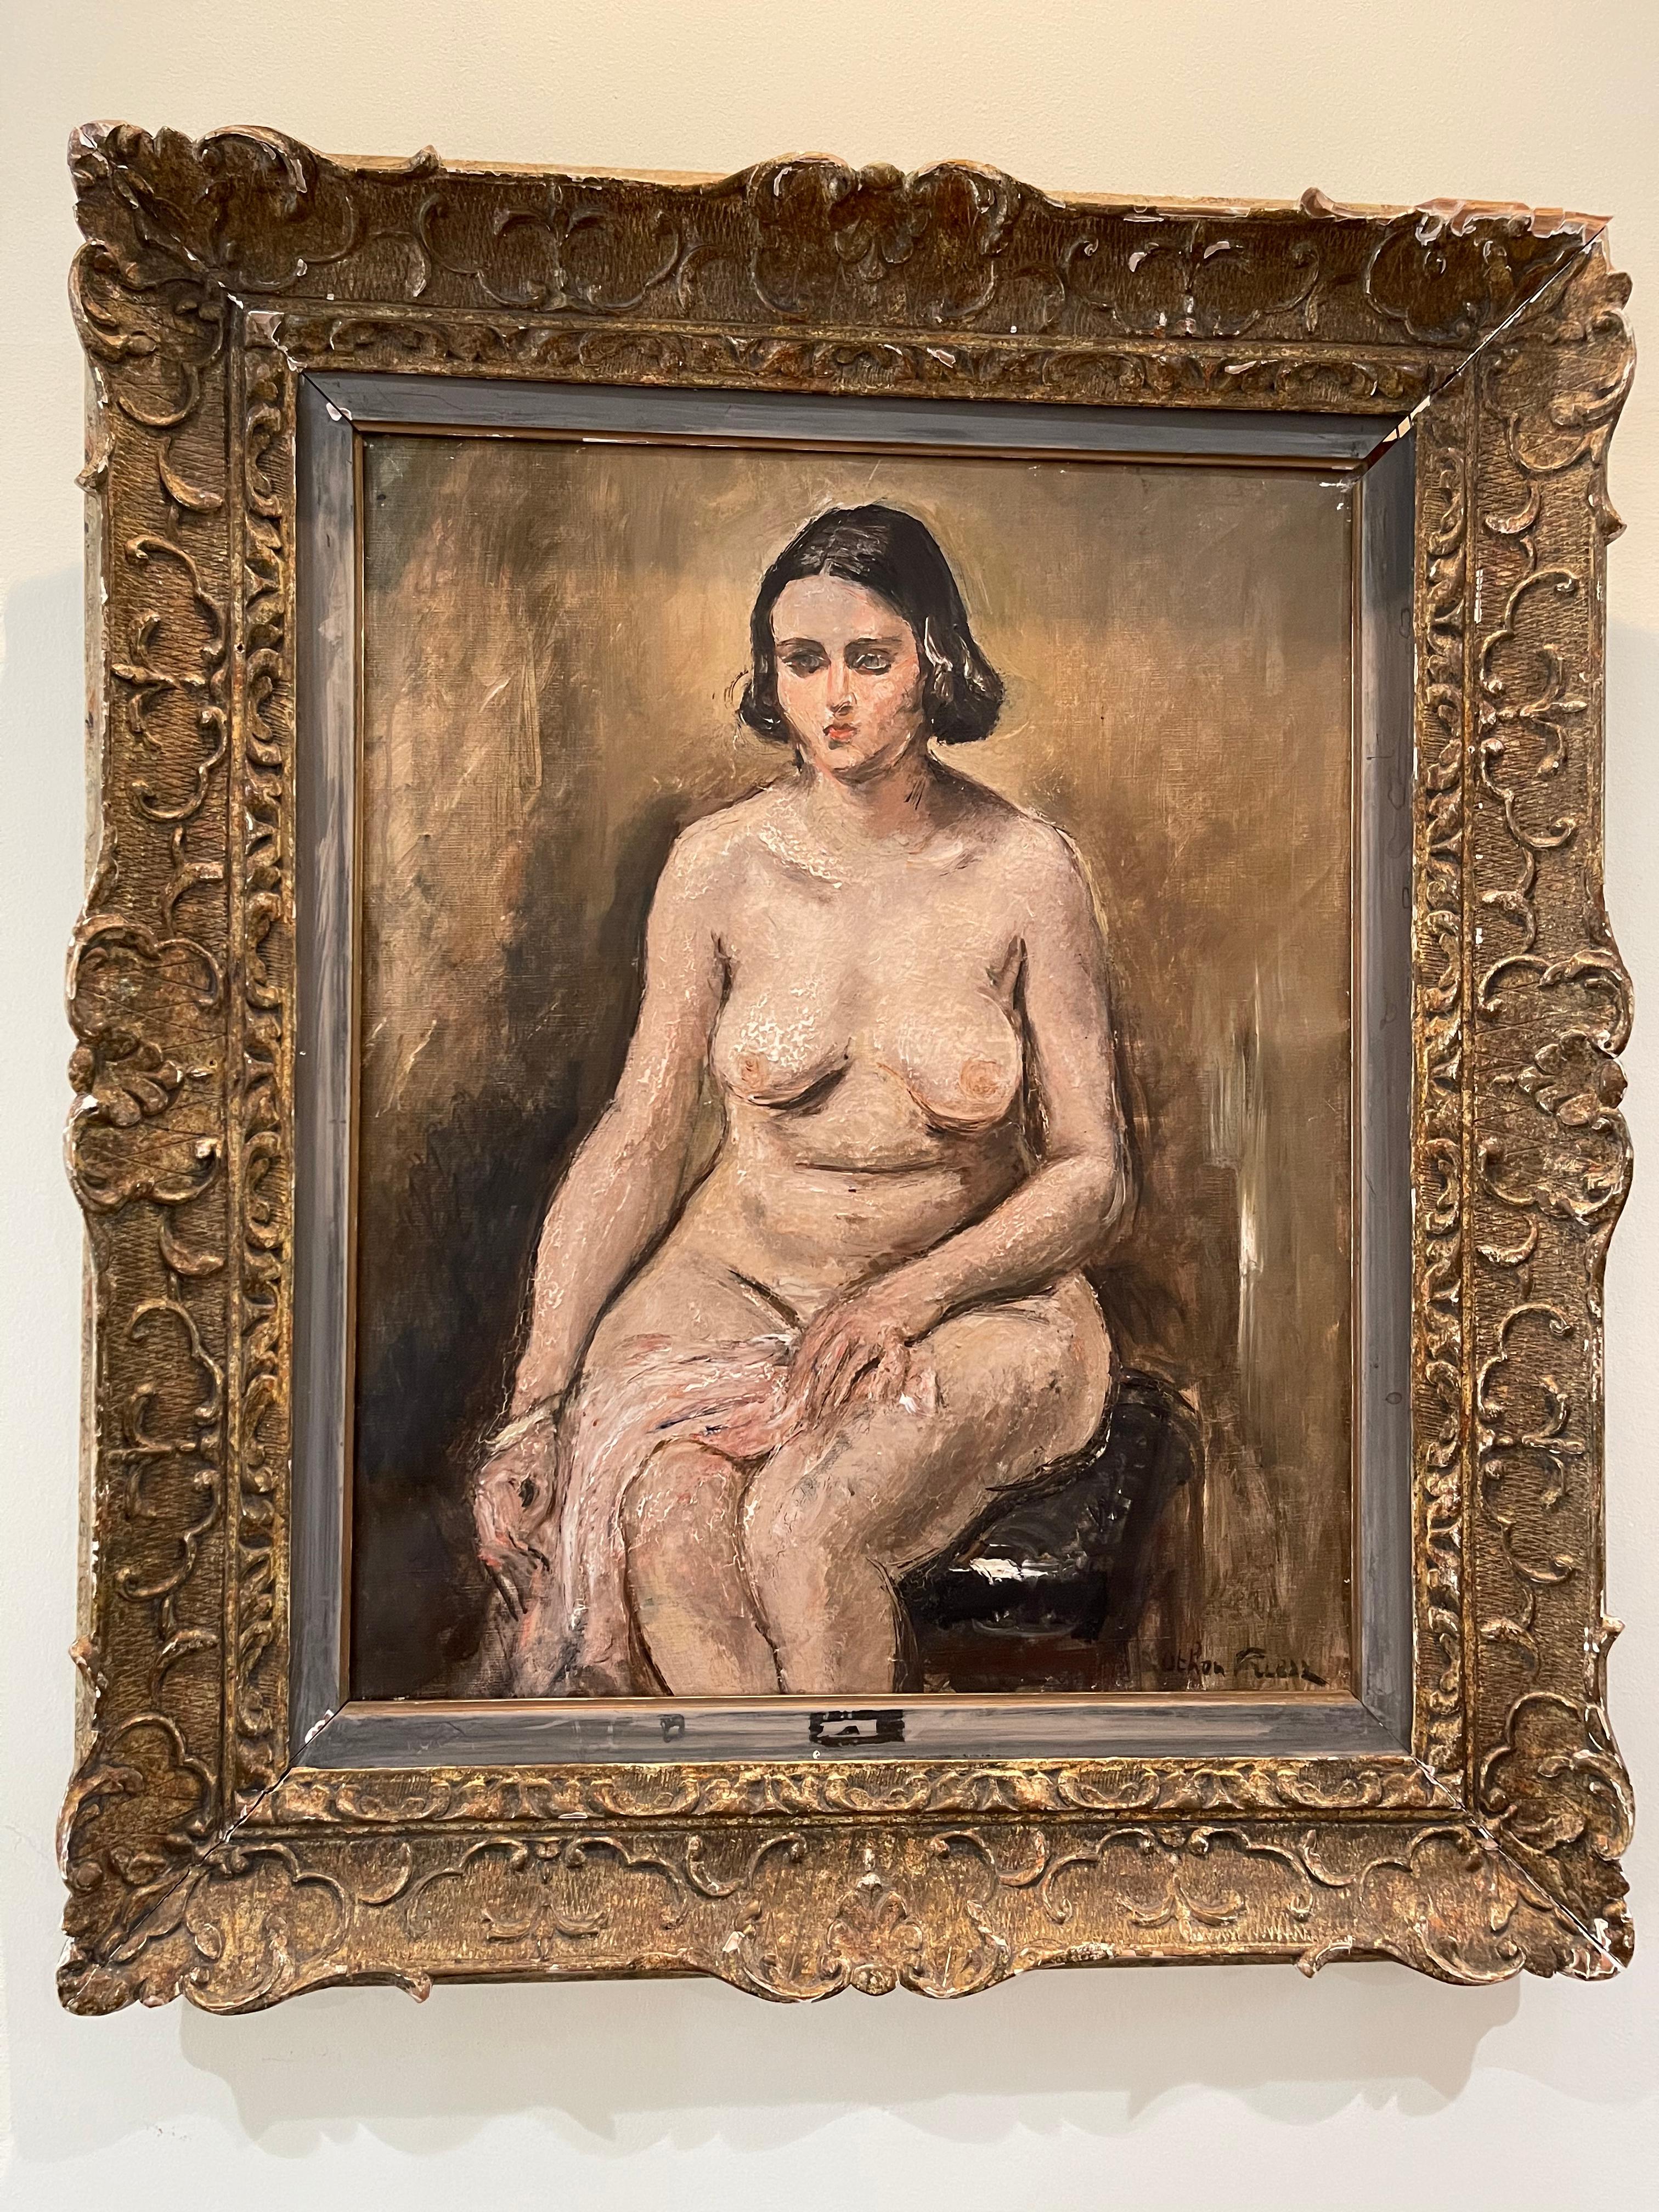 Nude gallery models in Philadelphia